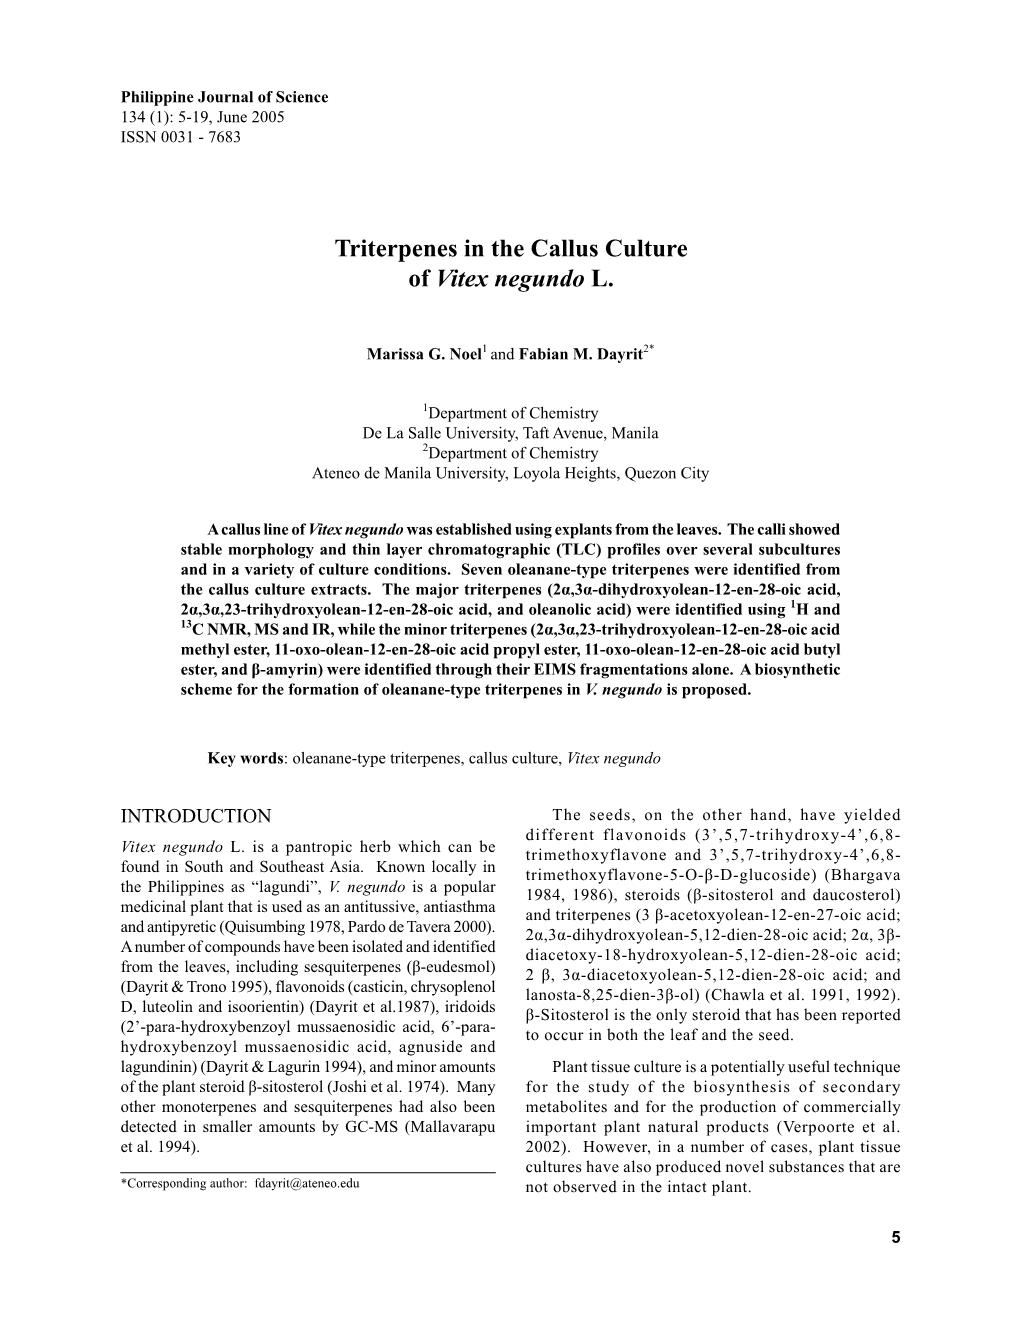 Triterpenes in the Callus Culture of Vitex Negundo L